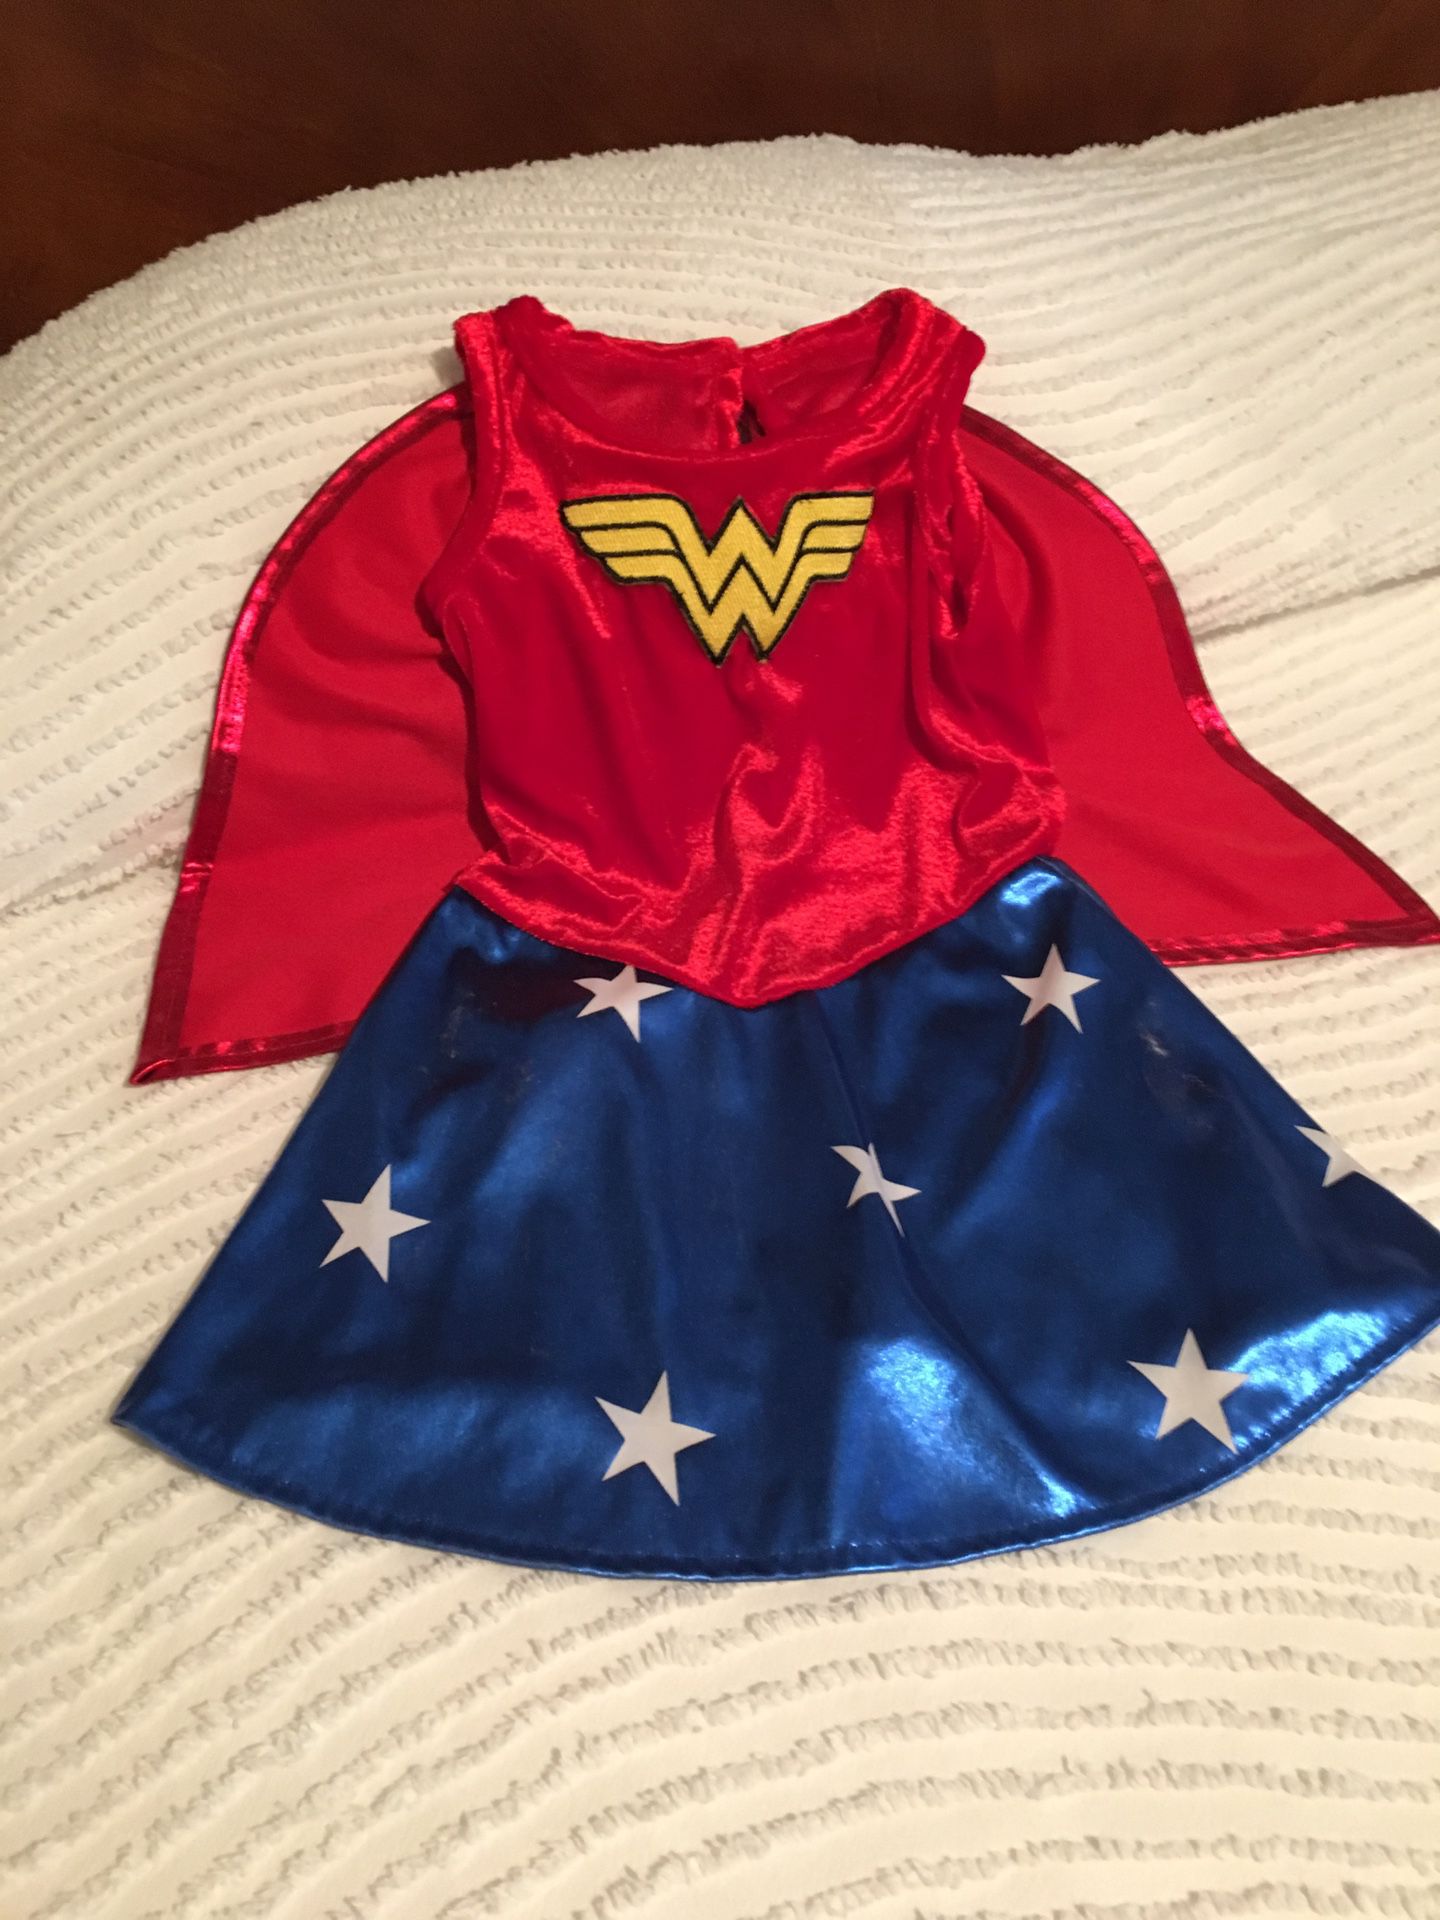 Child’s Wonder Woman costume